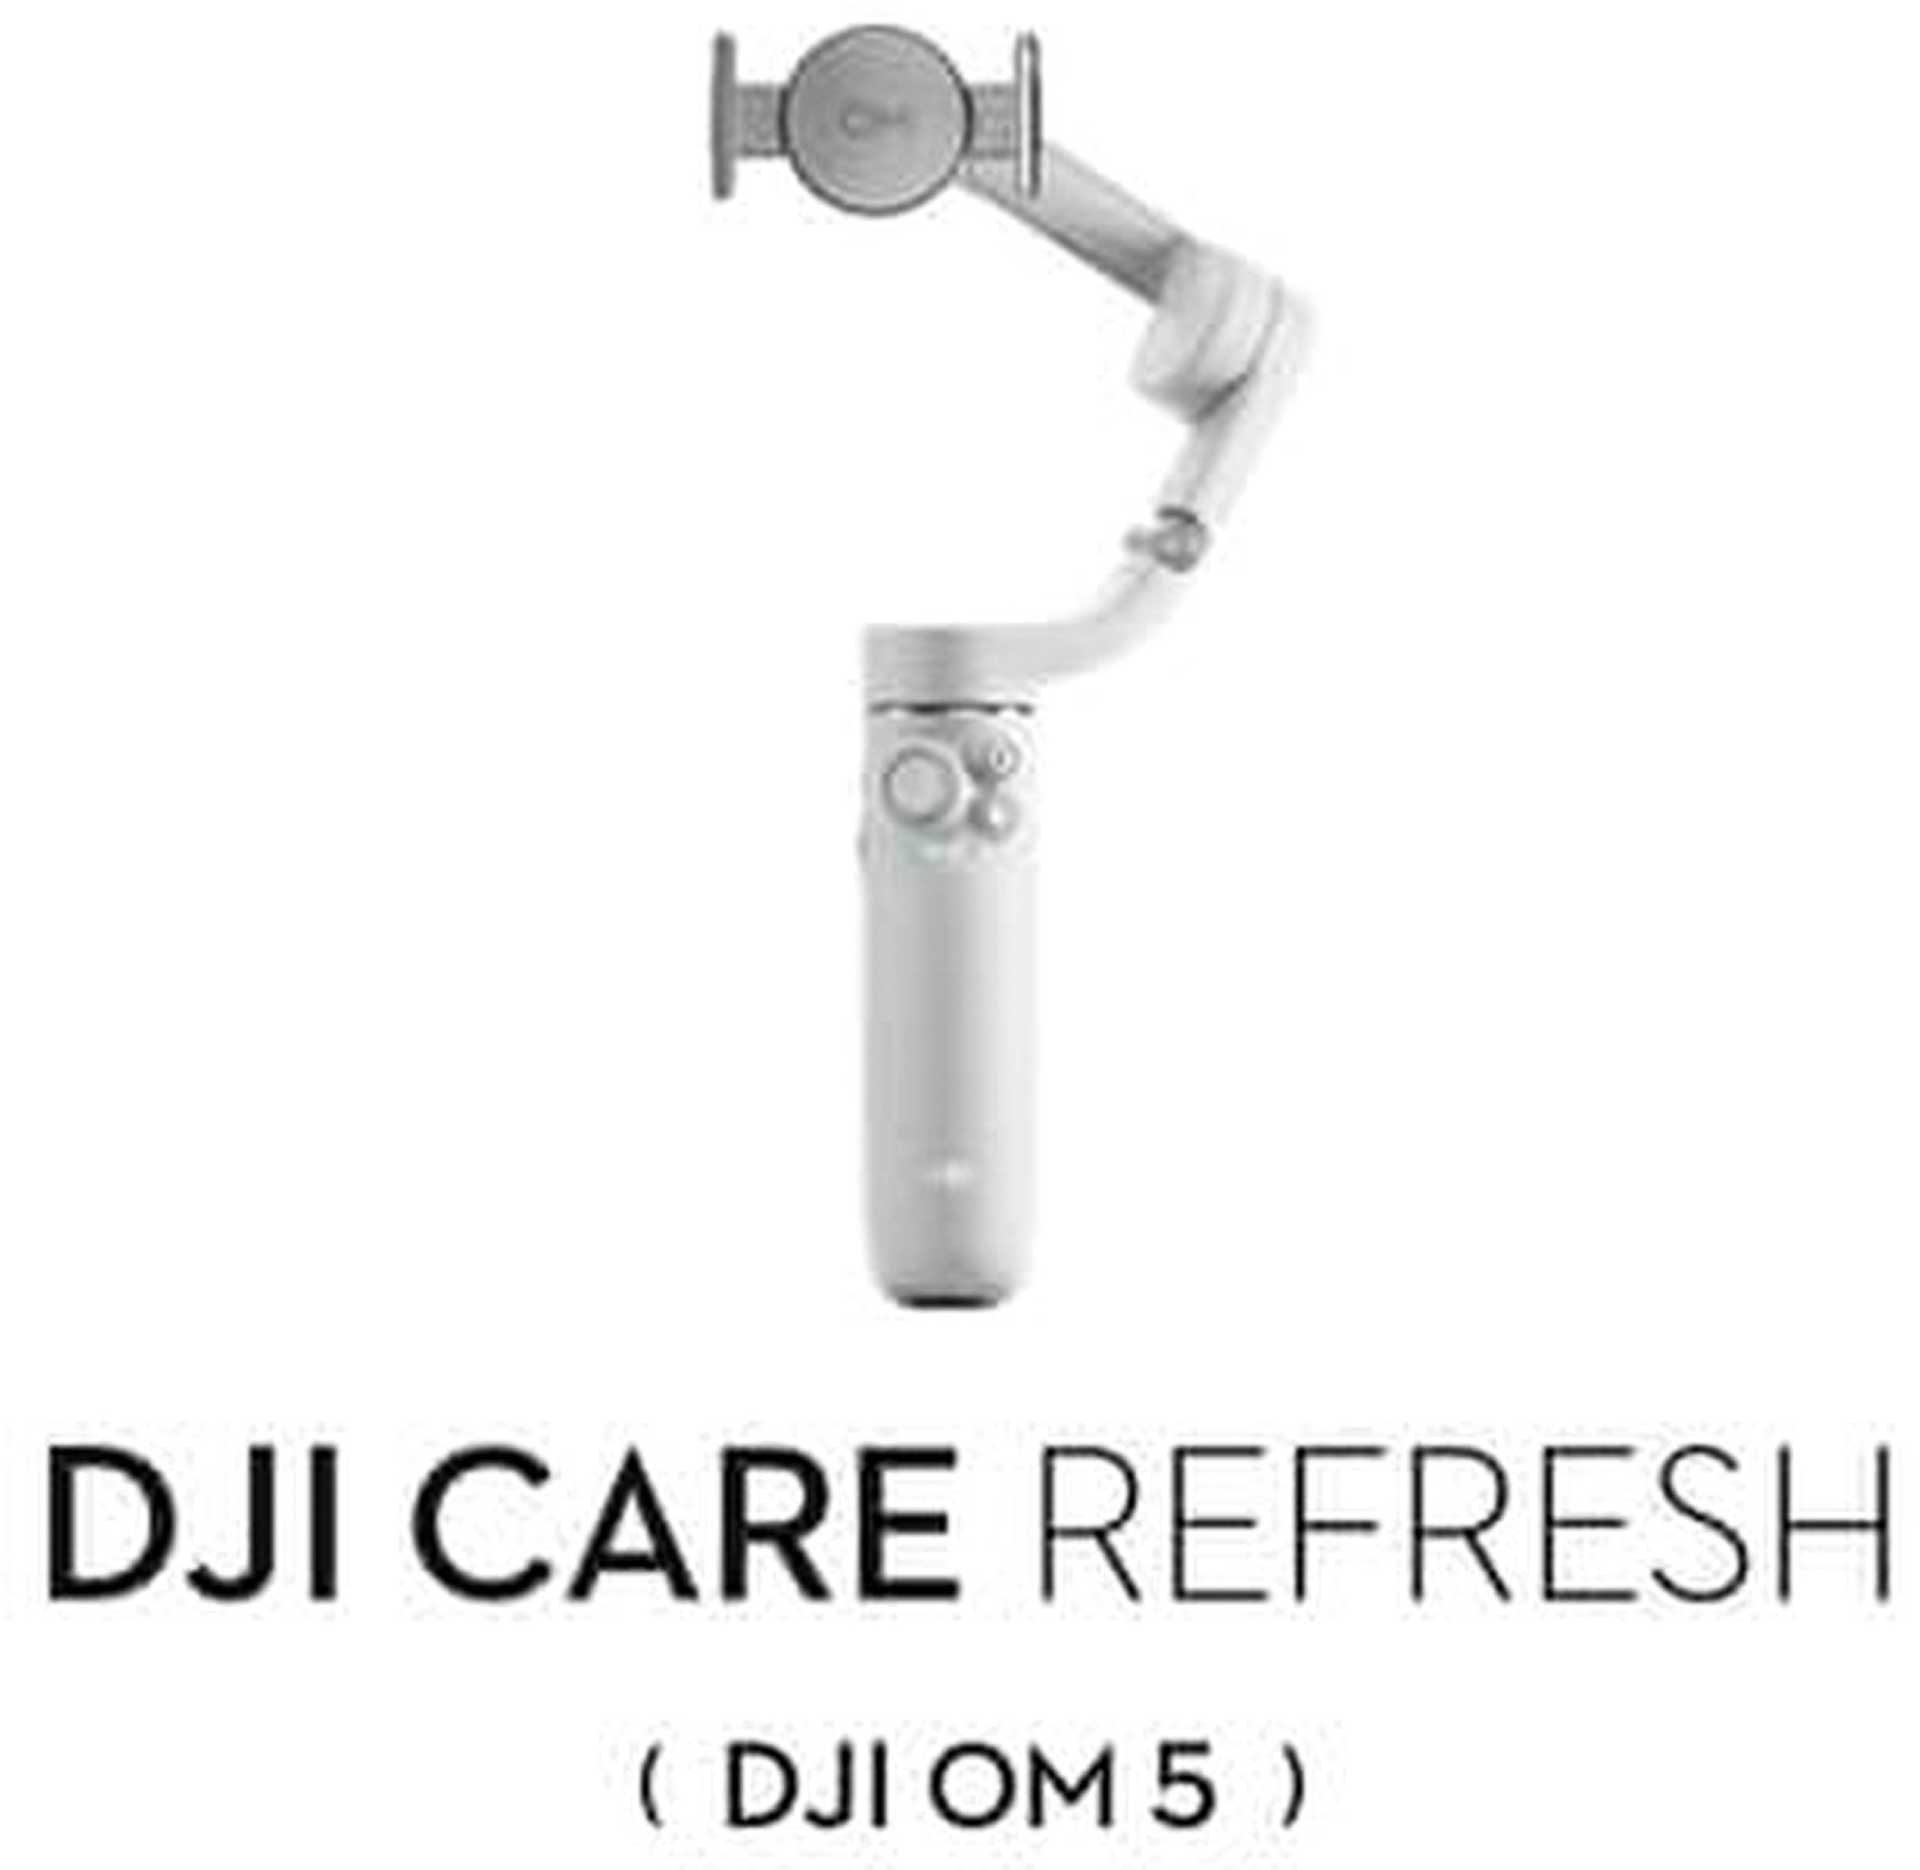 DJI Care Refresh (OM 5) 2 years